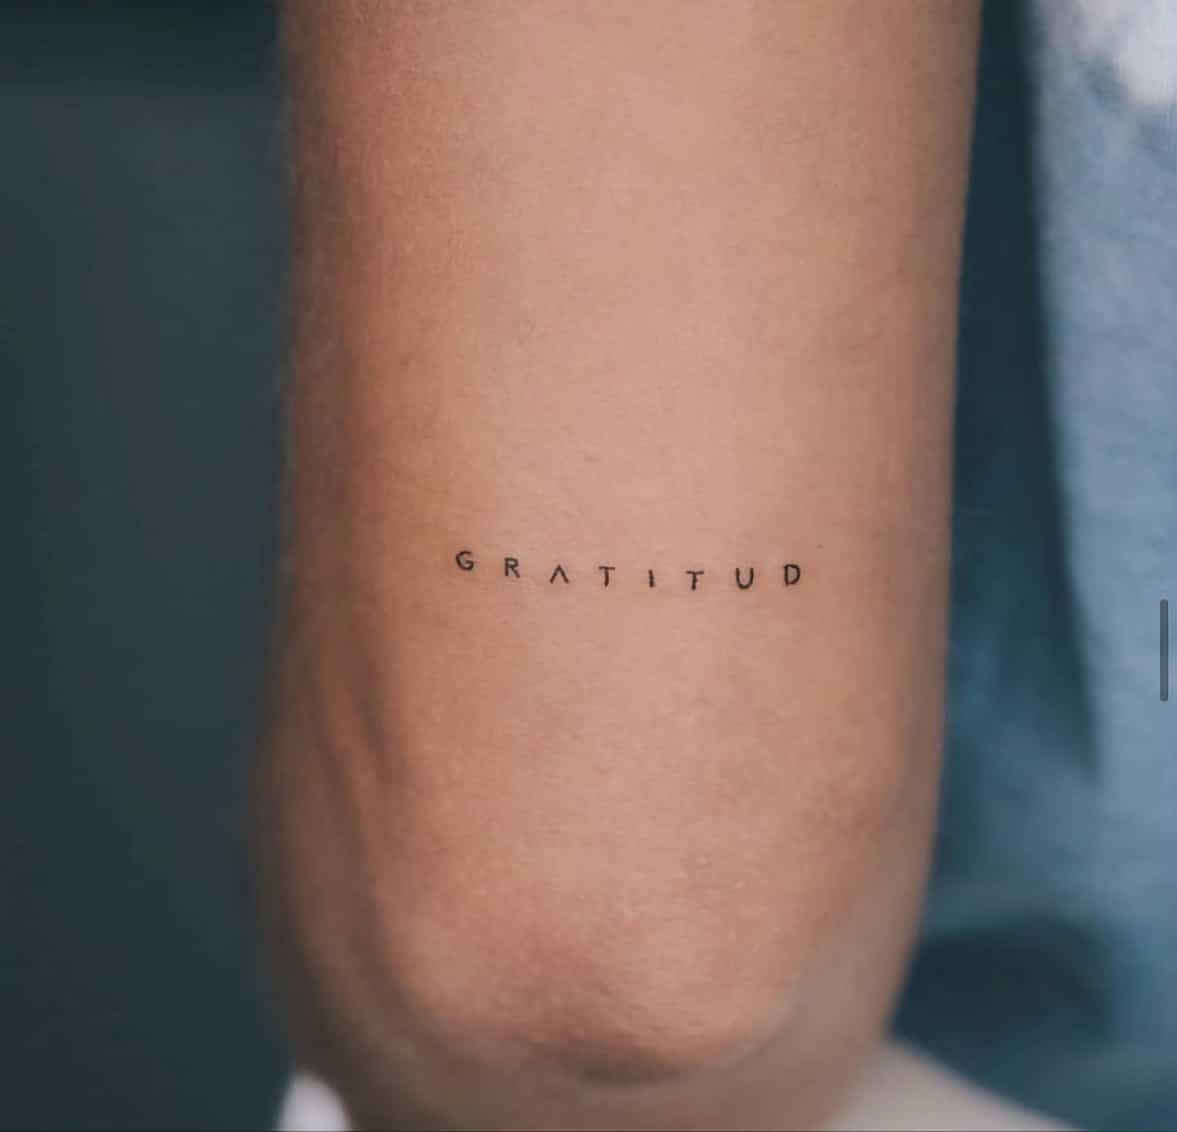 Palabras para tatuarse - Gratitud